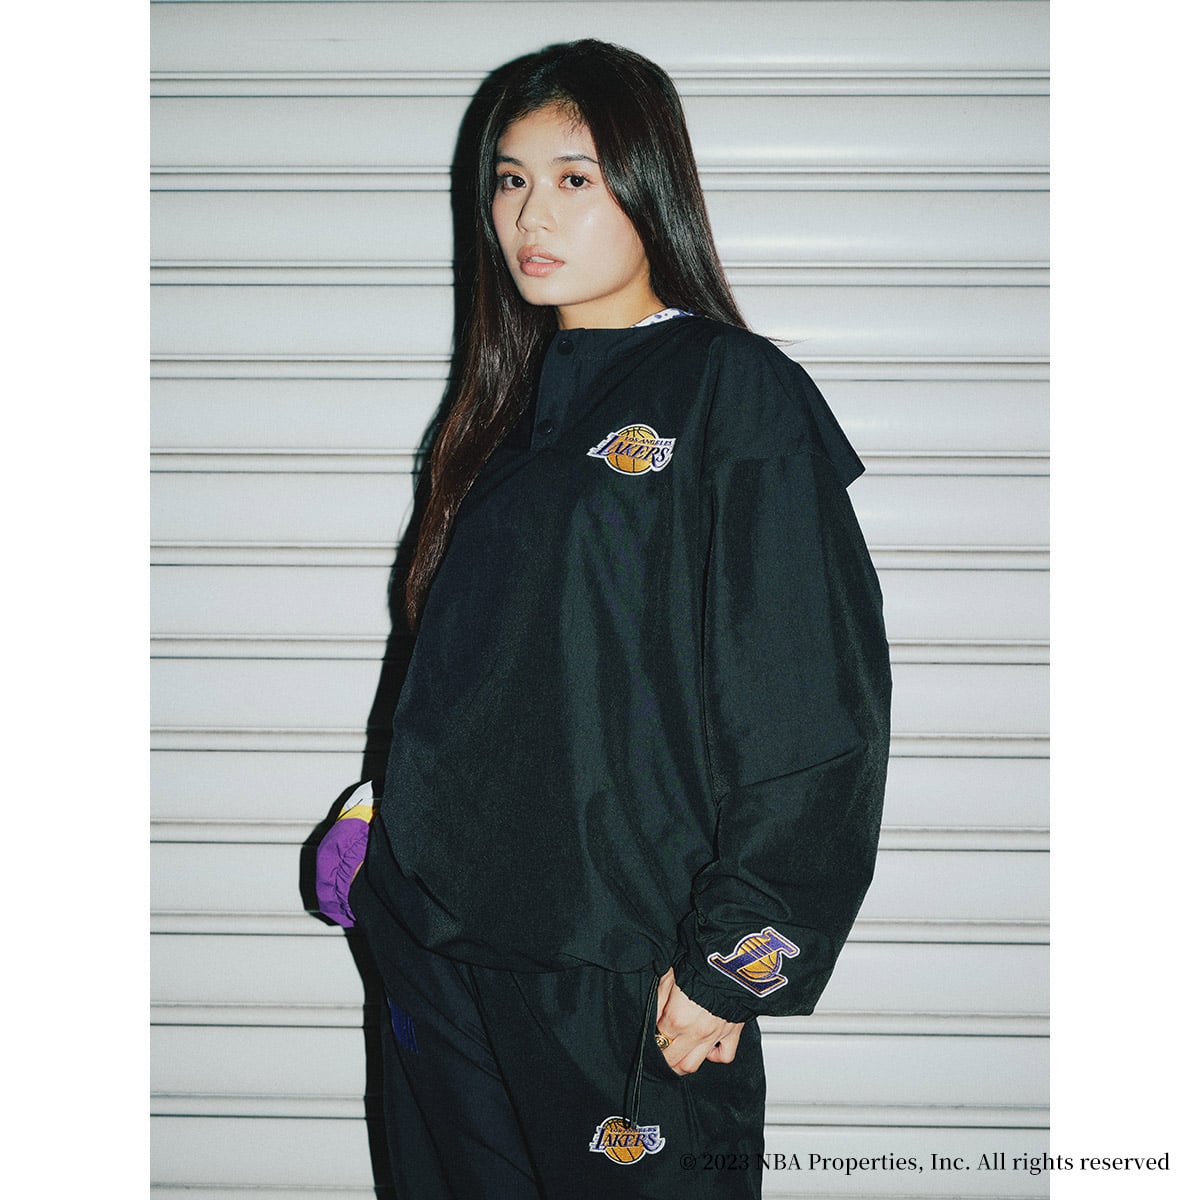 TOKYO23 NBA Nylon pullover BLACK×BULLS …